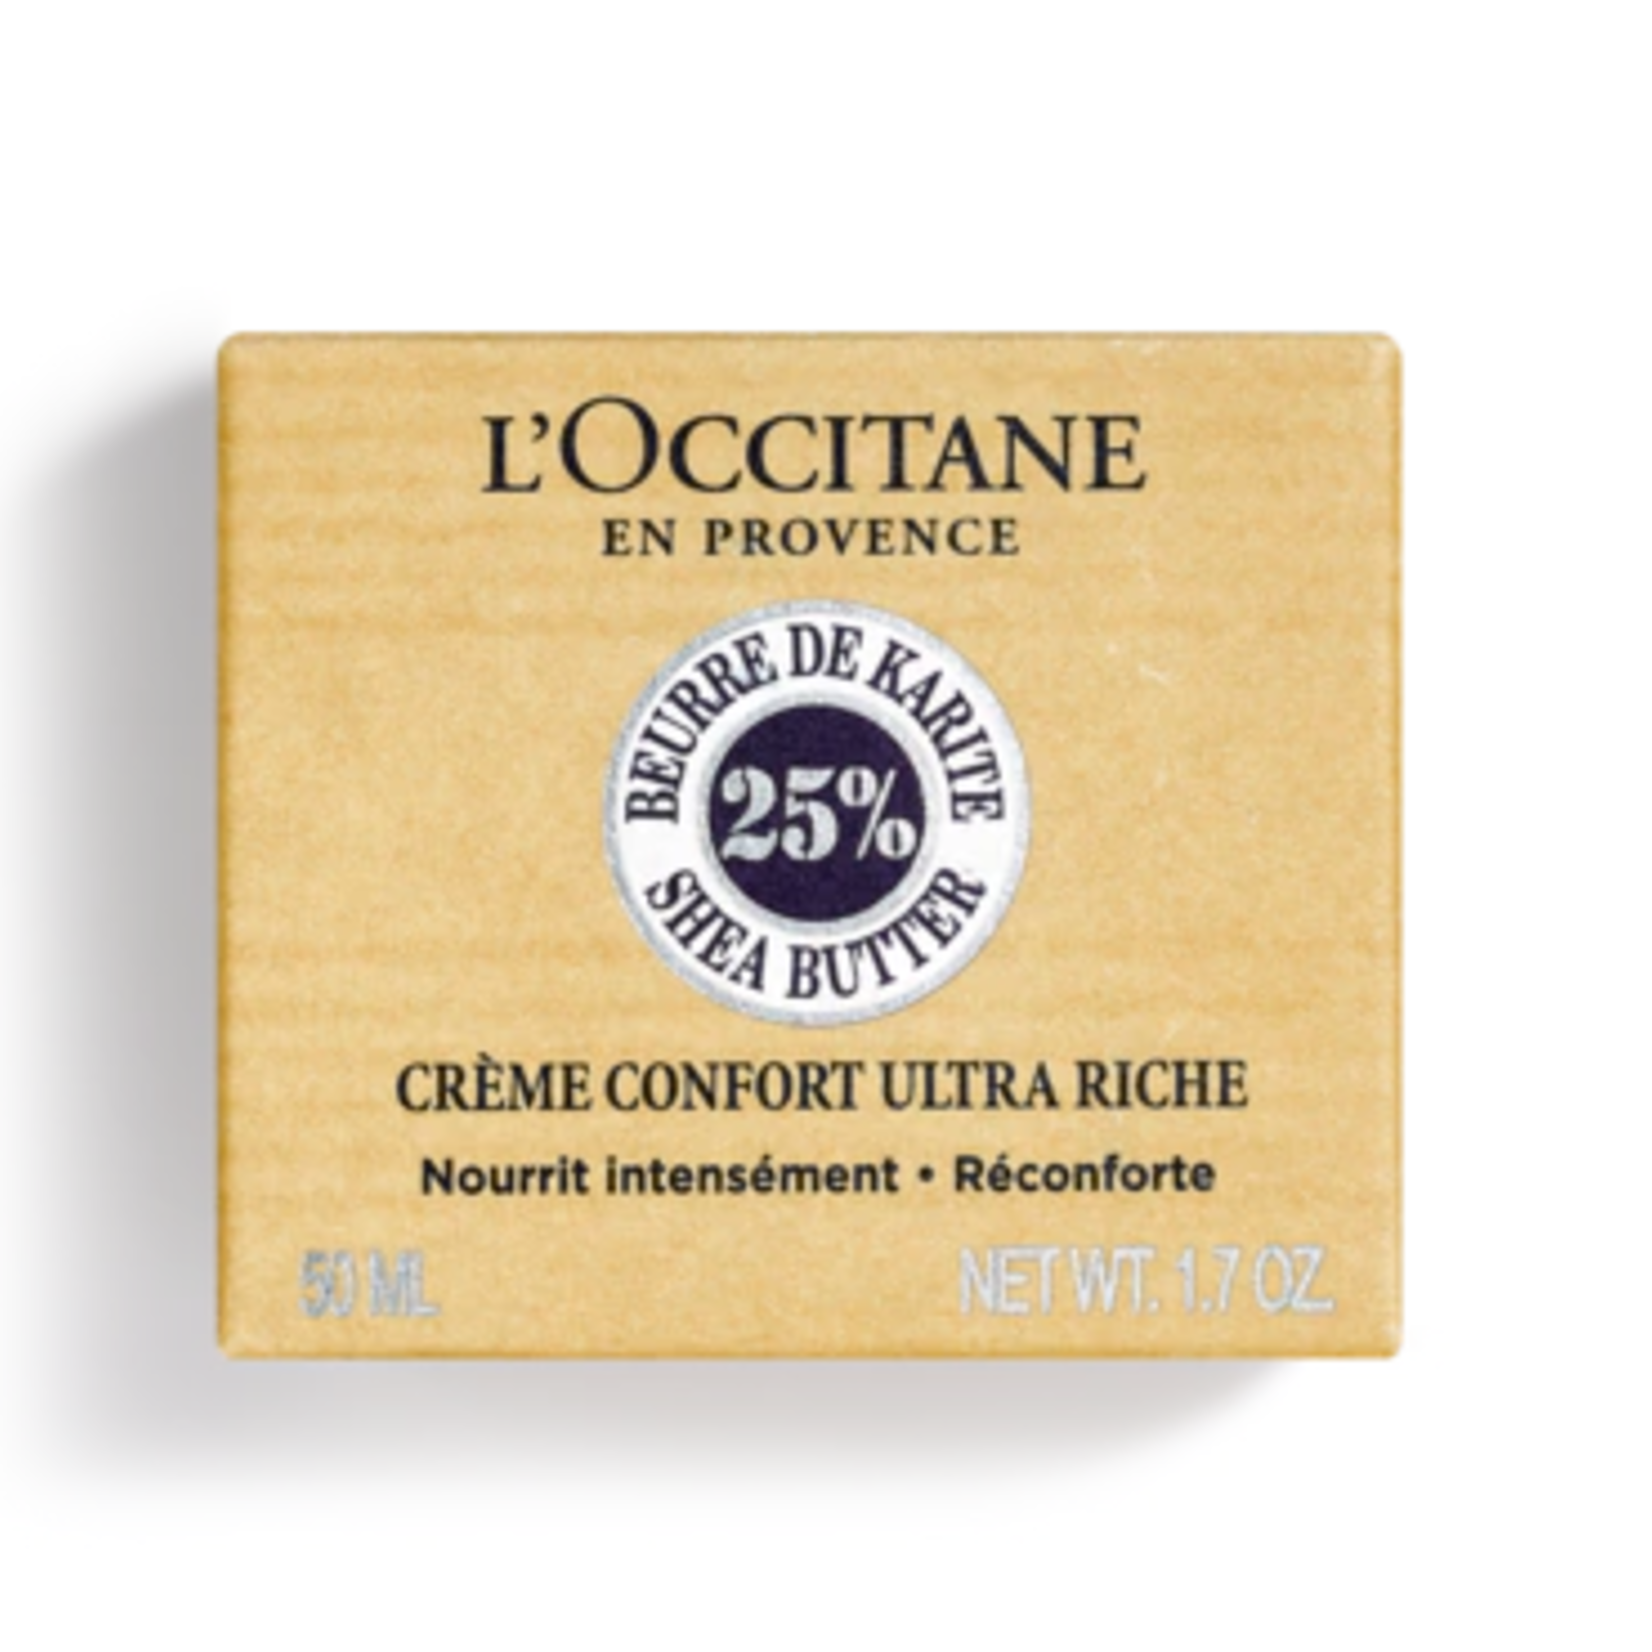 L'OCCITANE - CREME CONFORT ULTRA-RICHE KARITE